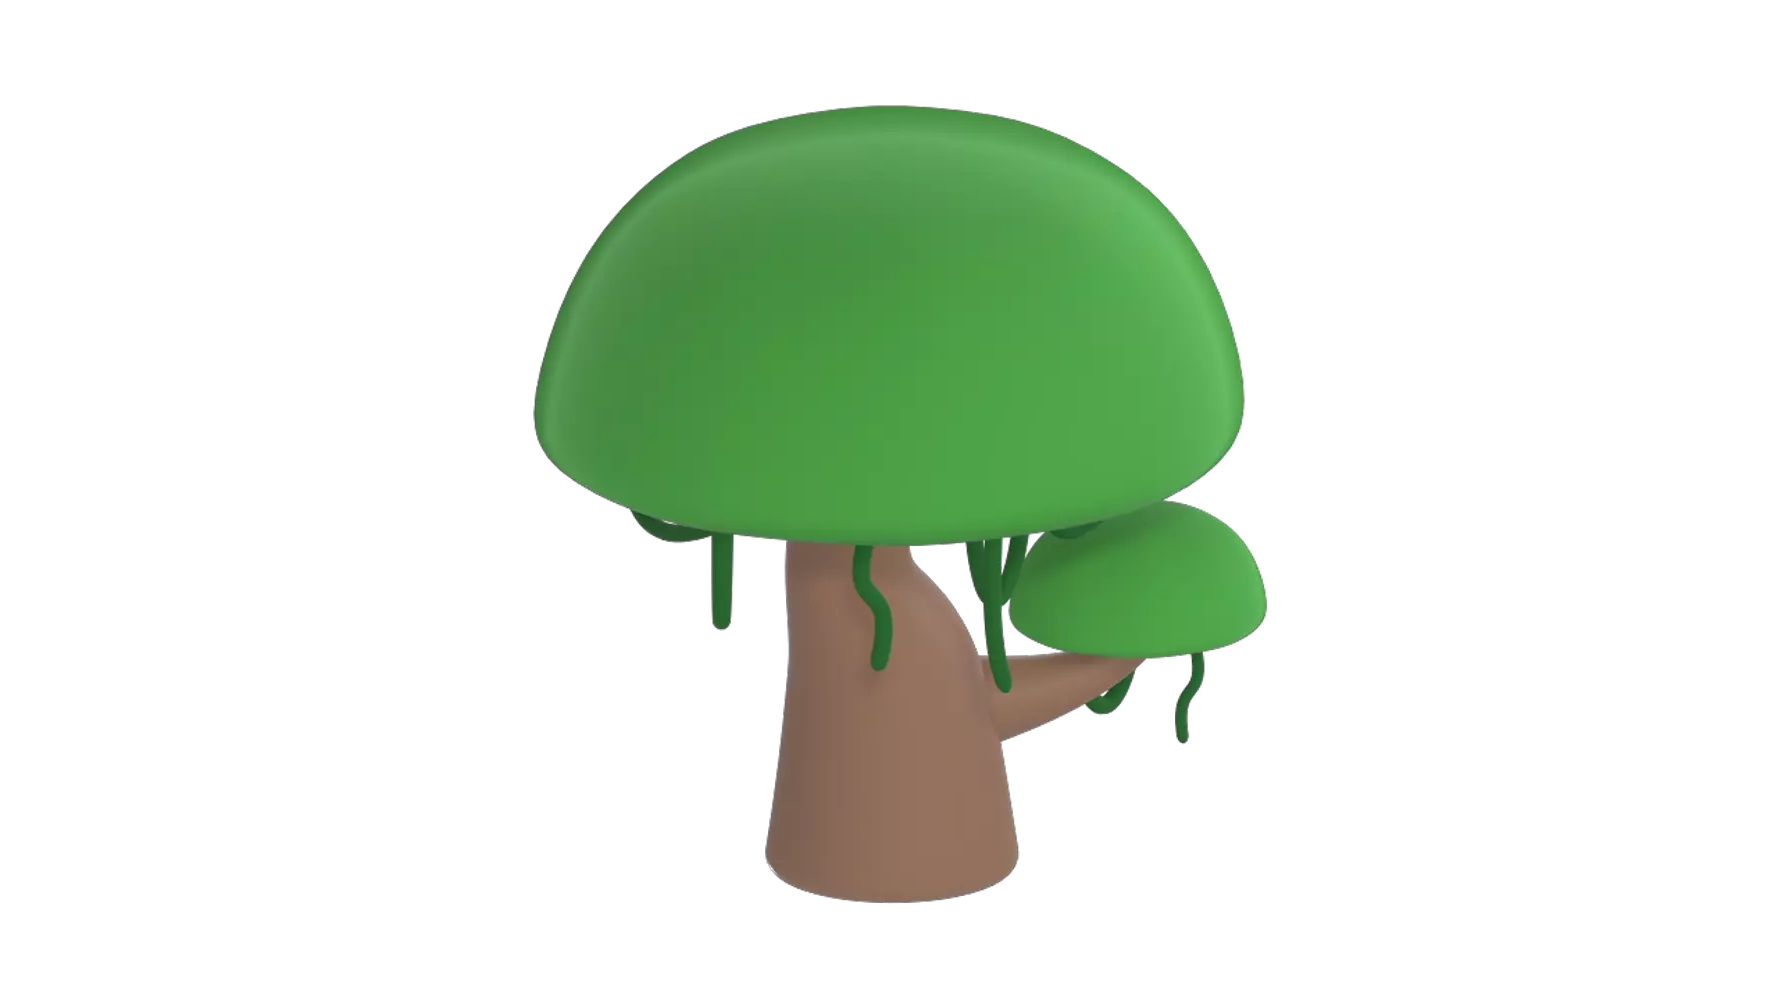 Banyan Tree 3D Graphic